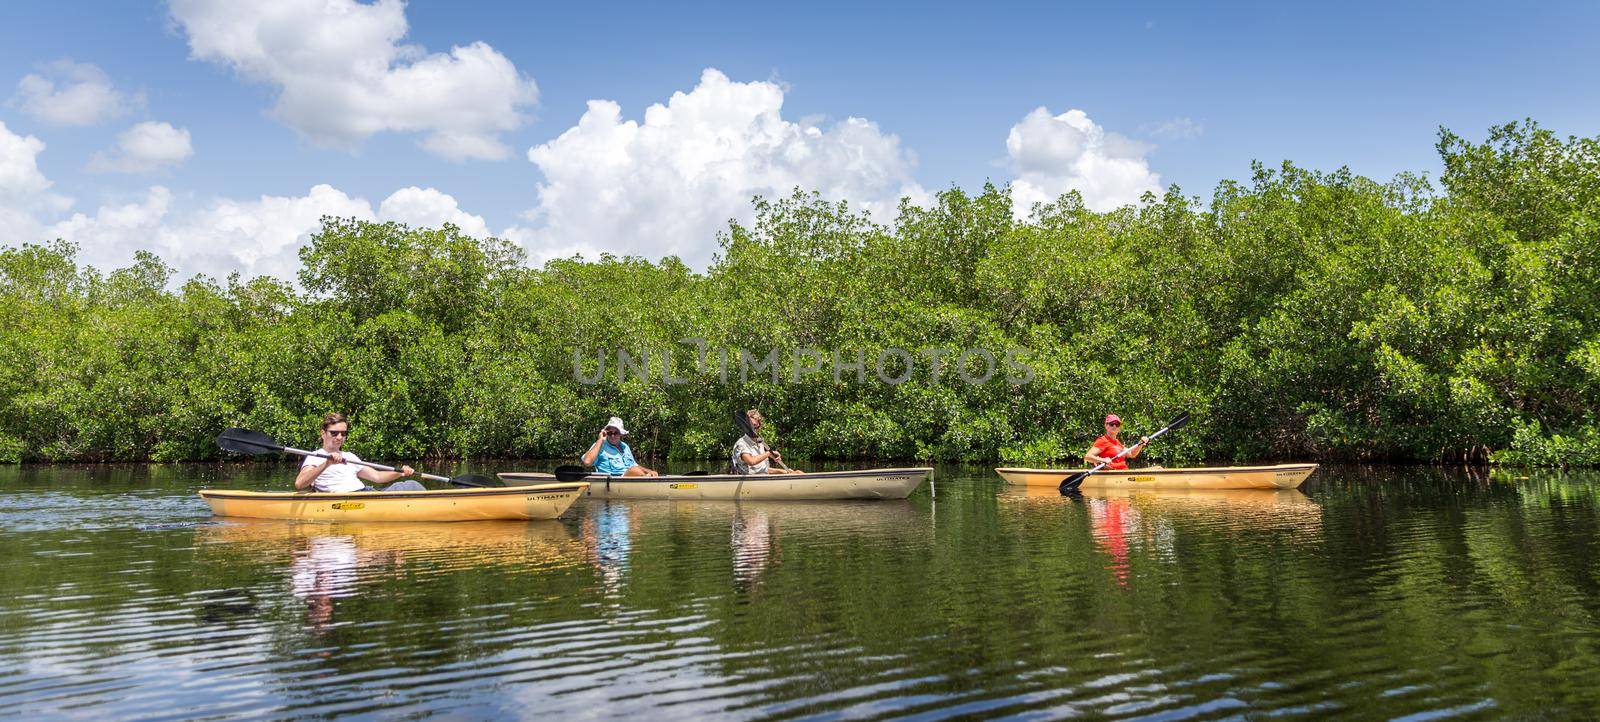 EVERGLADES, FLORIDA, USA - AUGUST 31: Tourists kayaking on August 31, 2014 in Everglades, Florida, USA.